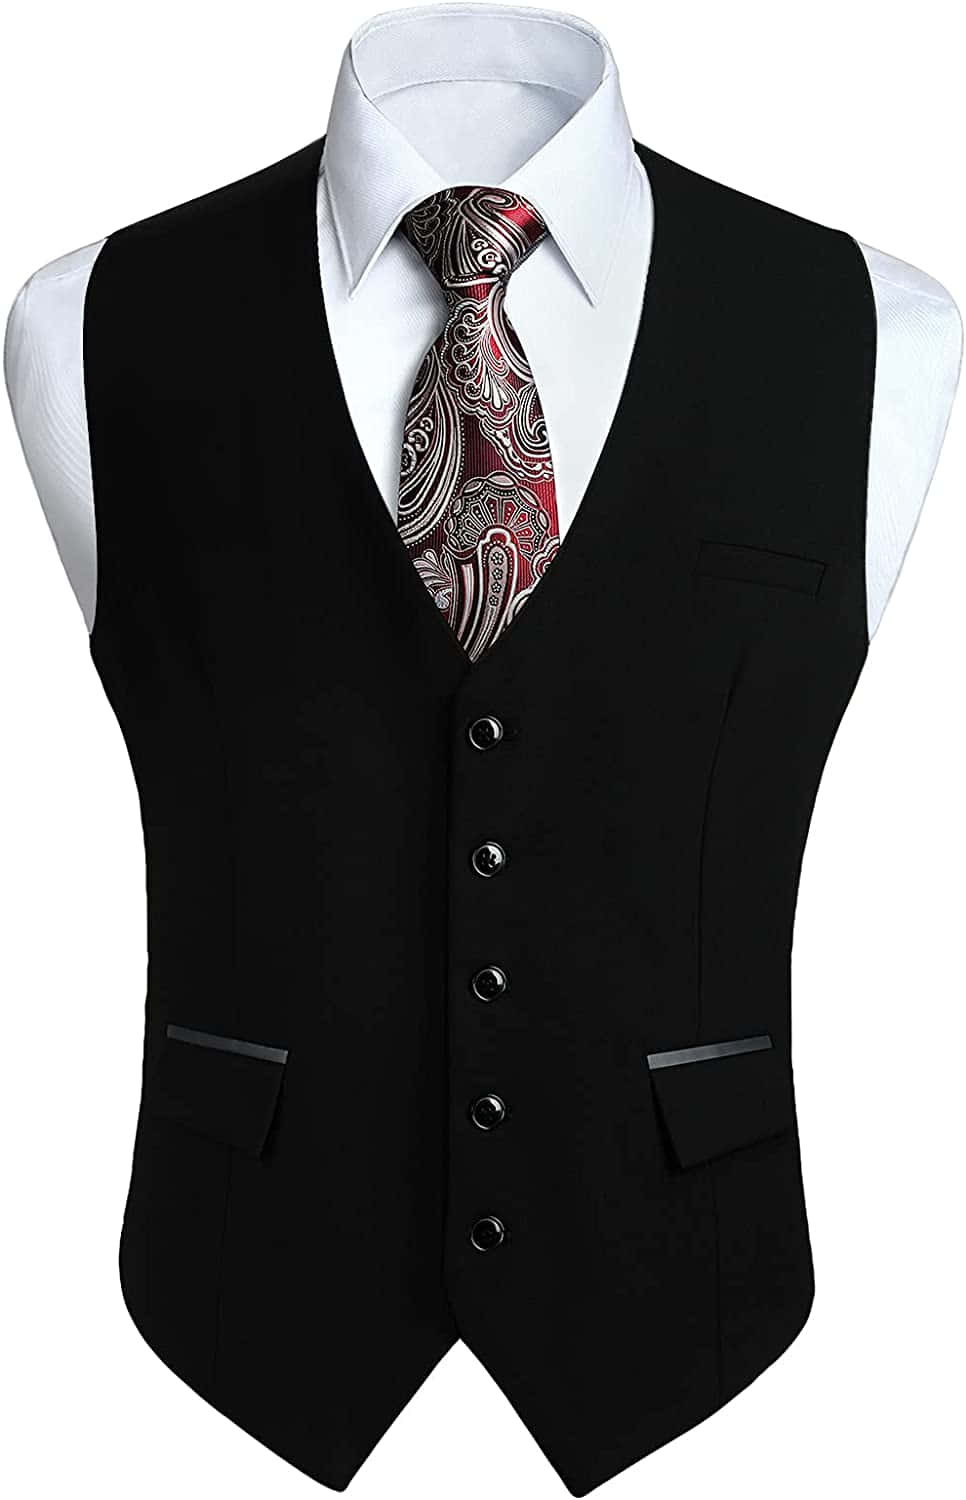 A Black Vest With A Paisley Tie